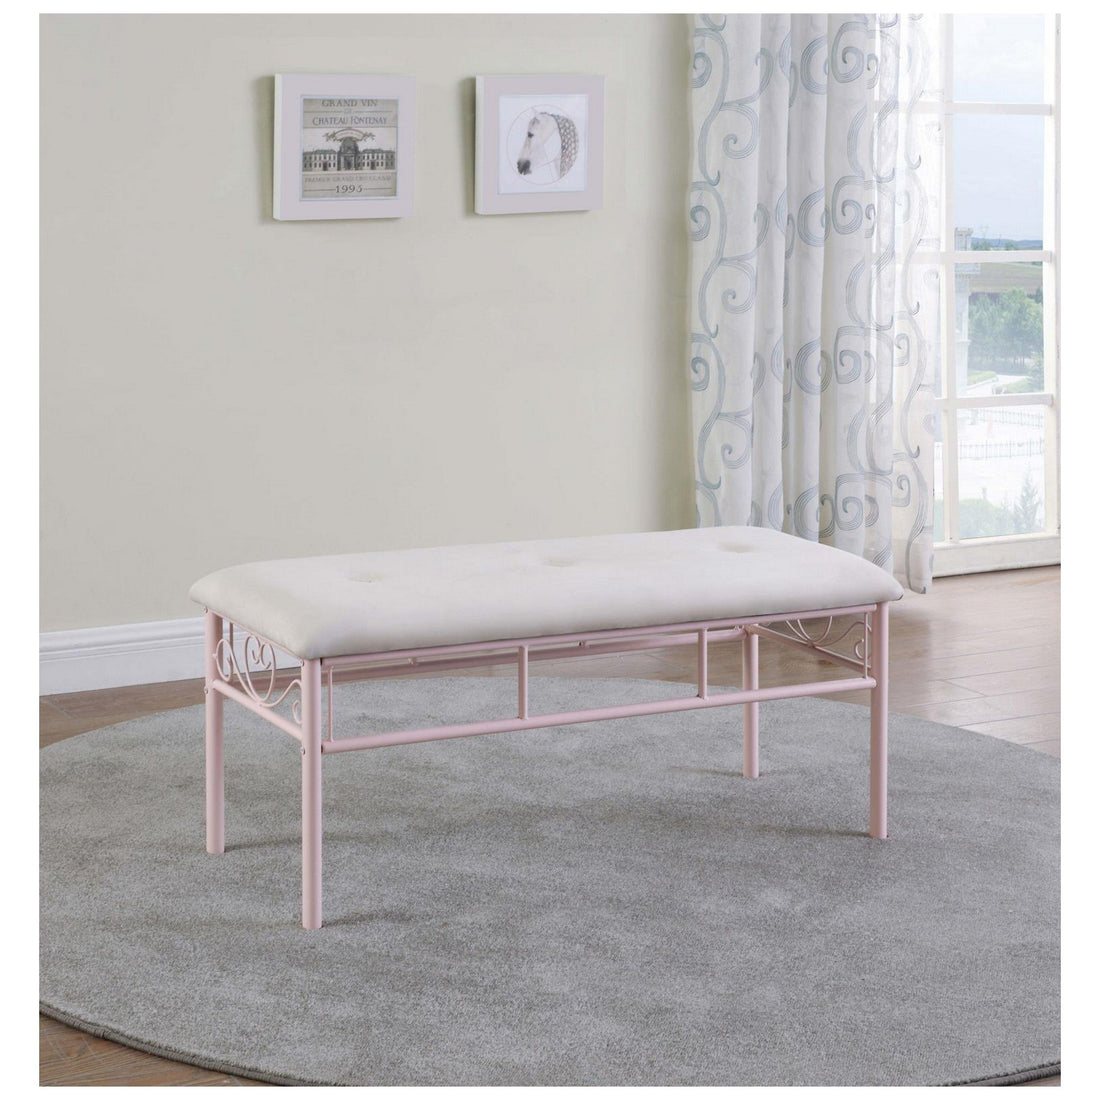 Massi Tufted Upholstered Bench Powder Pink 401156